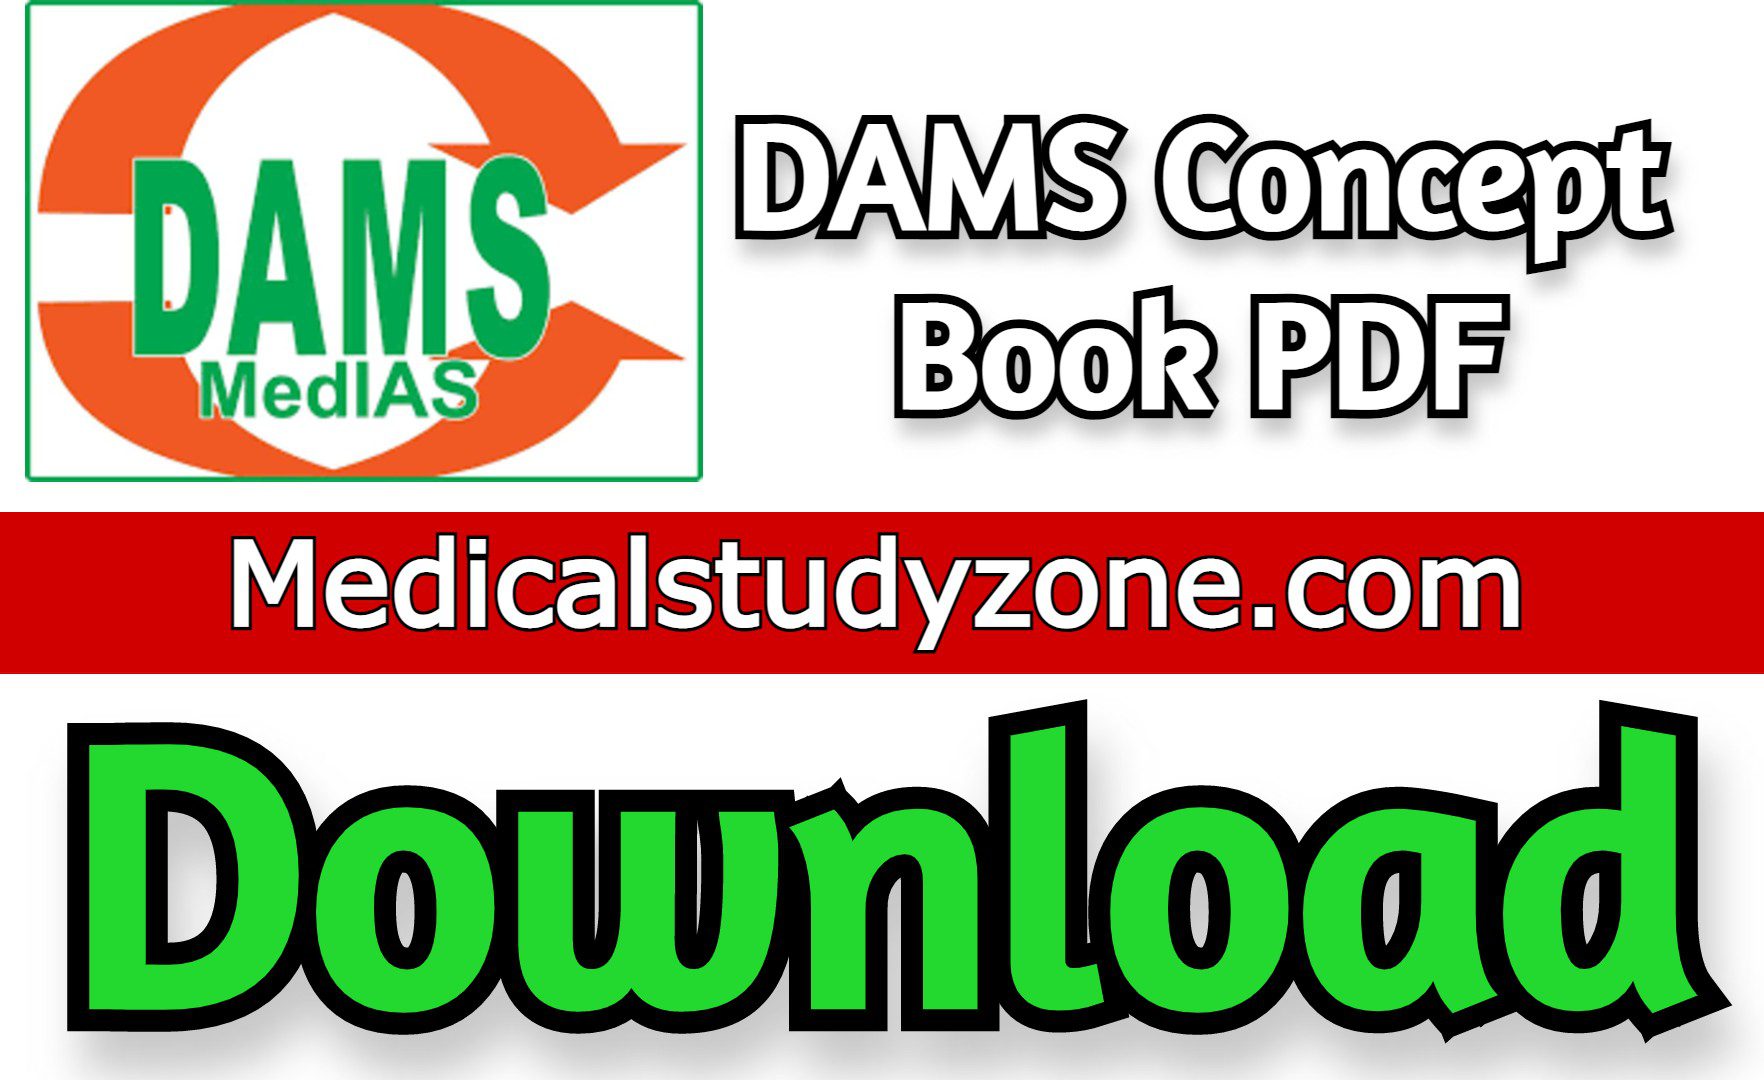 DAMS Concept Book 2022 PDF Free Download